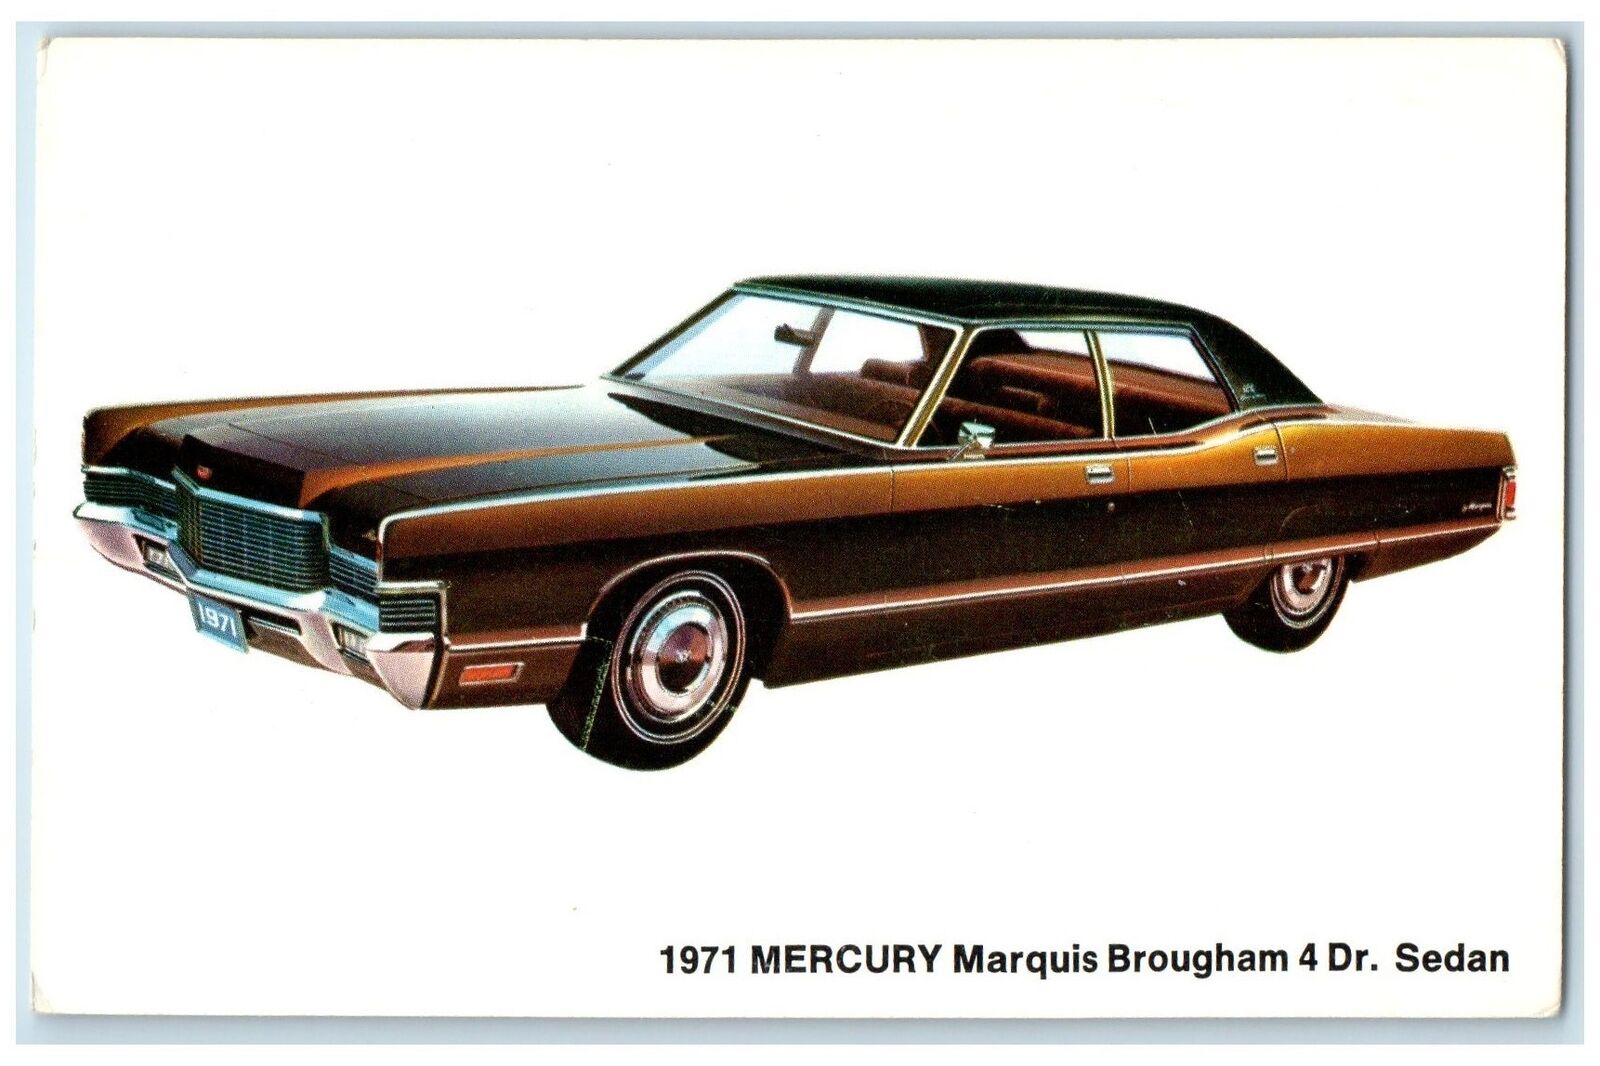 c1971 1971 Mercury Marquis Brougham 4 Dr. Sedan Waupaca Wisconsin Postcard